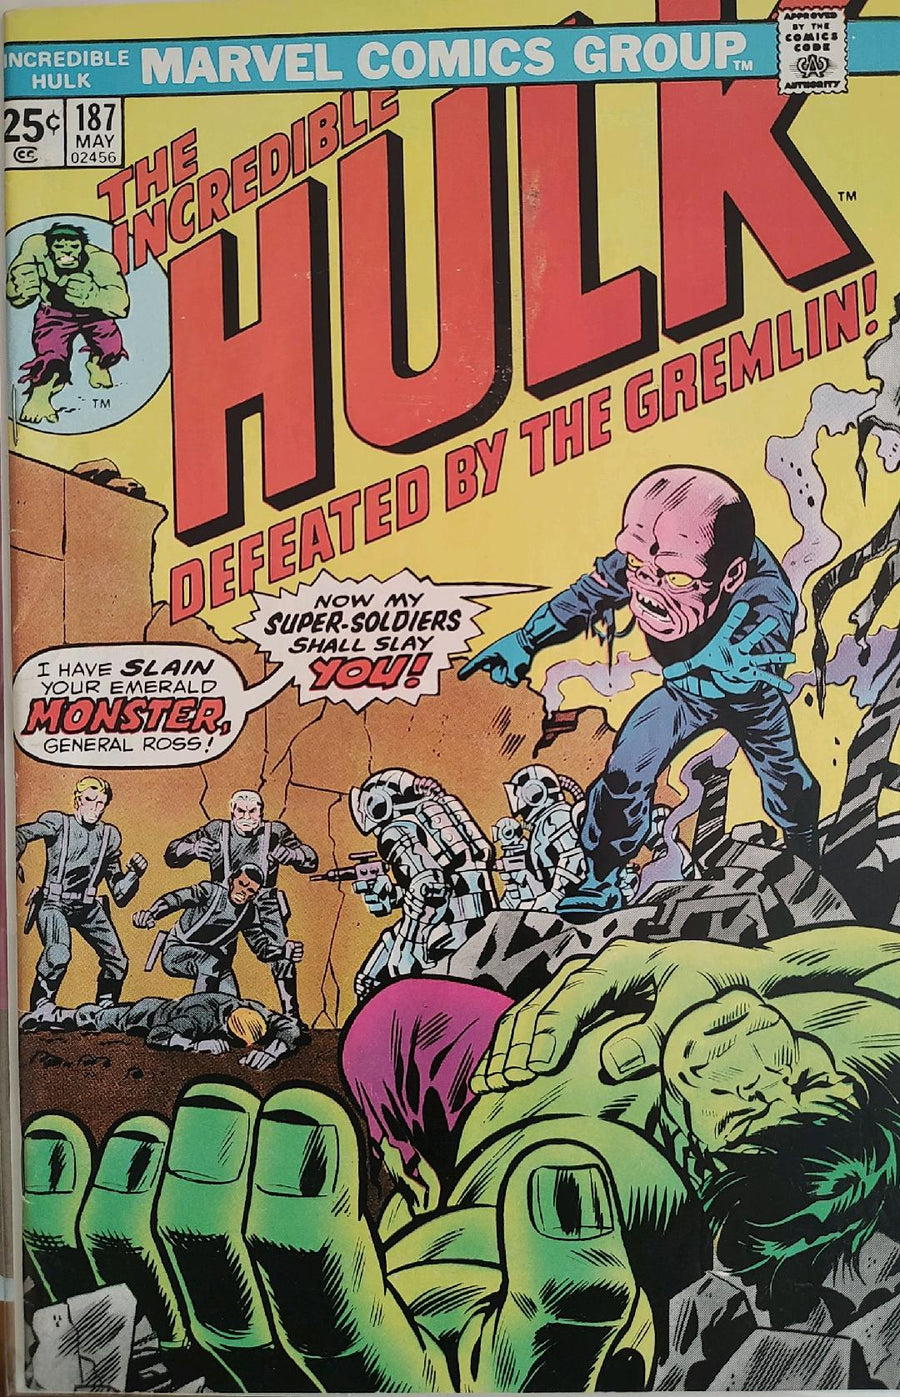 The Incredible Hulk #187 Comic Book Cover